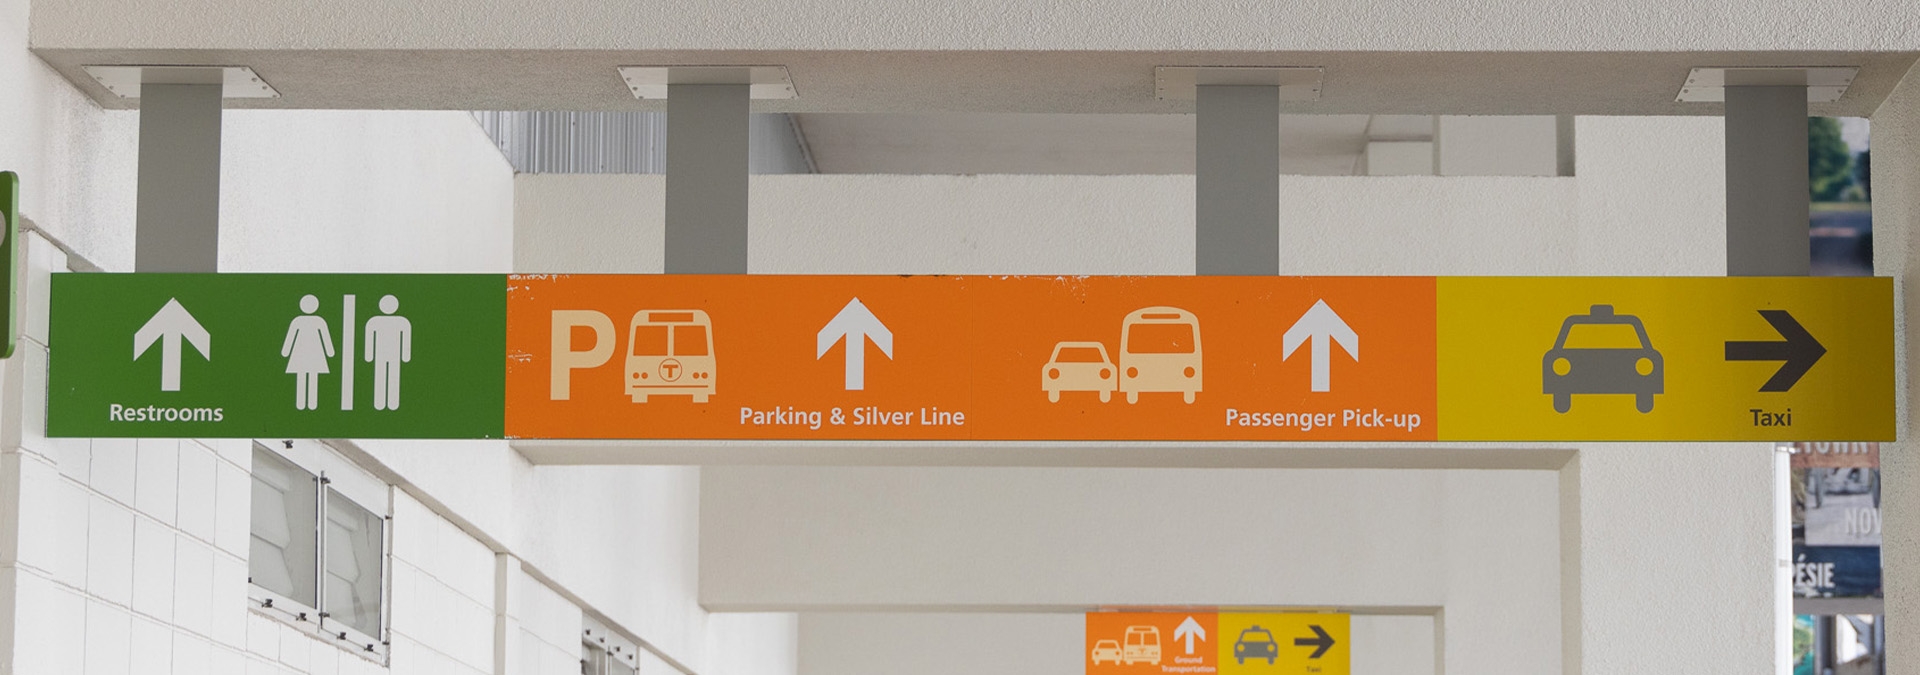 Signage to transportation options